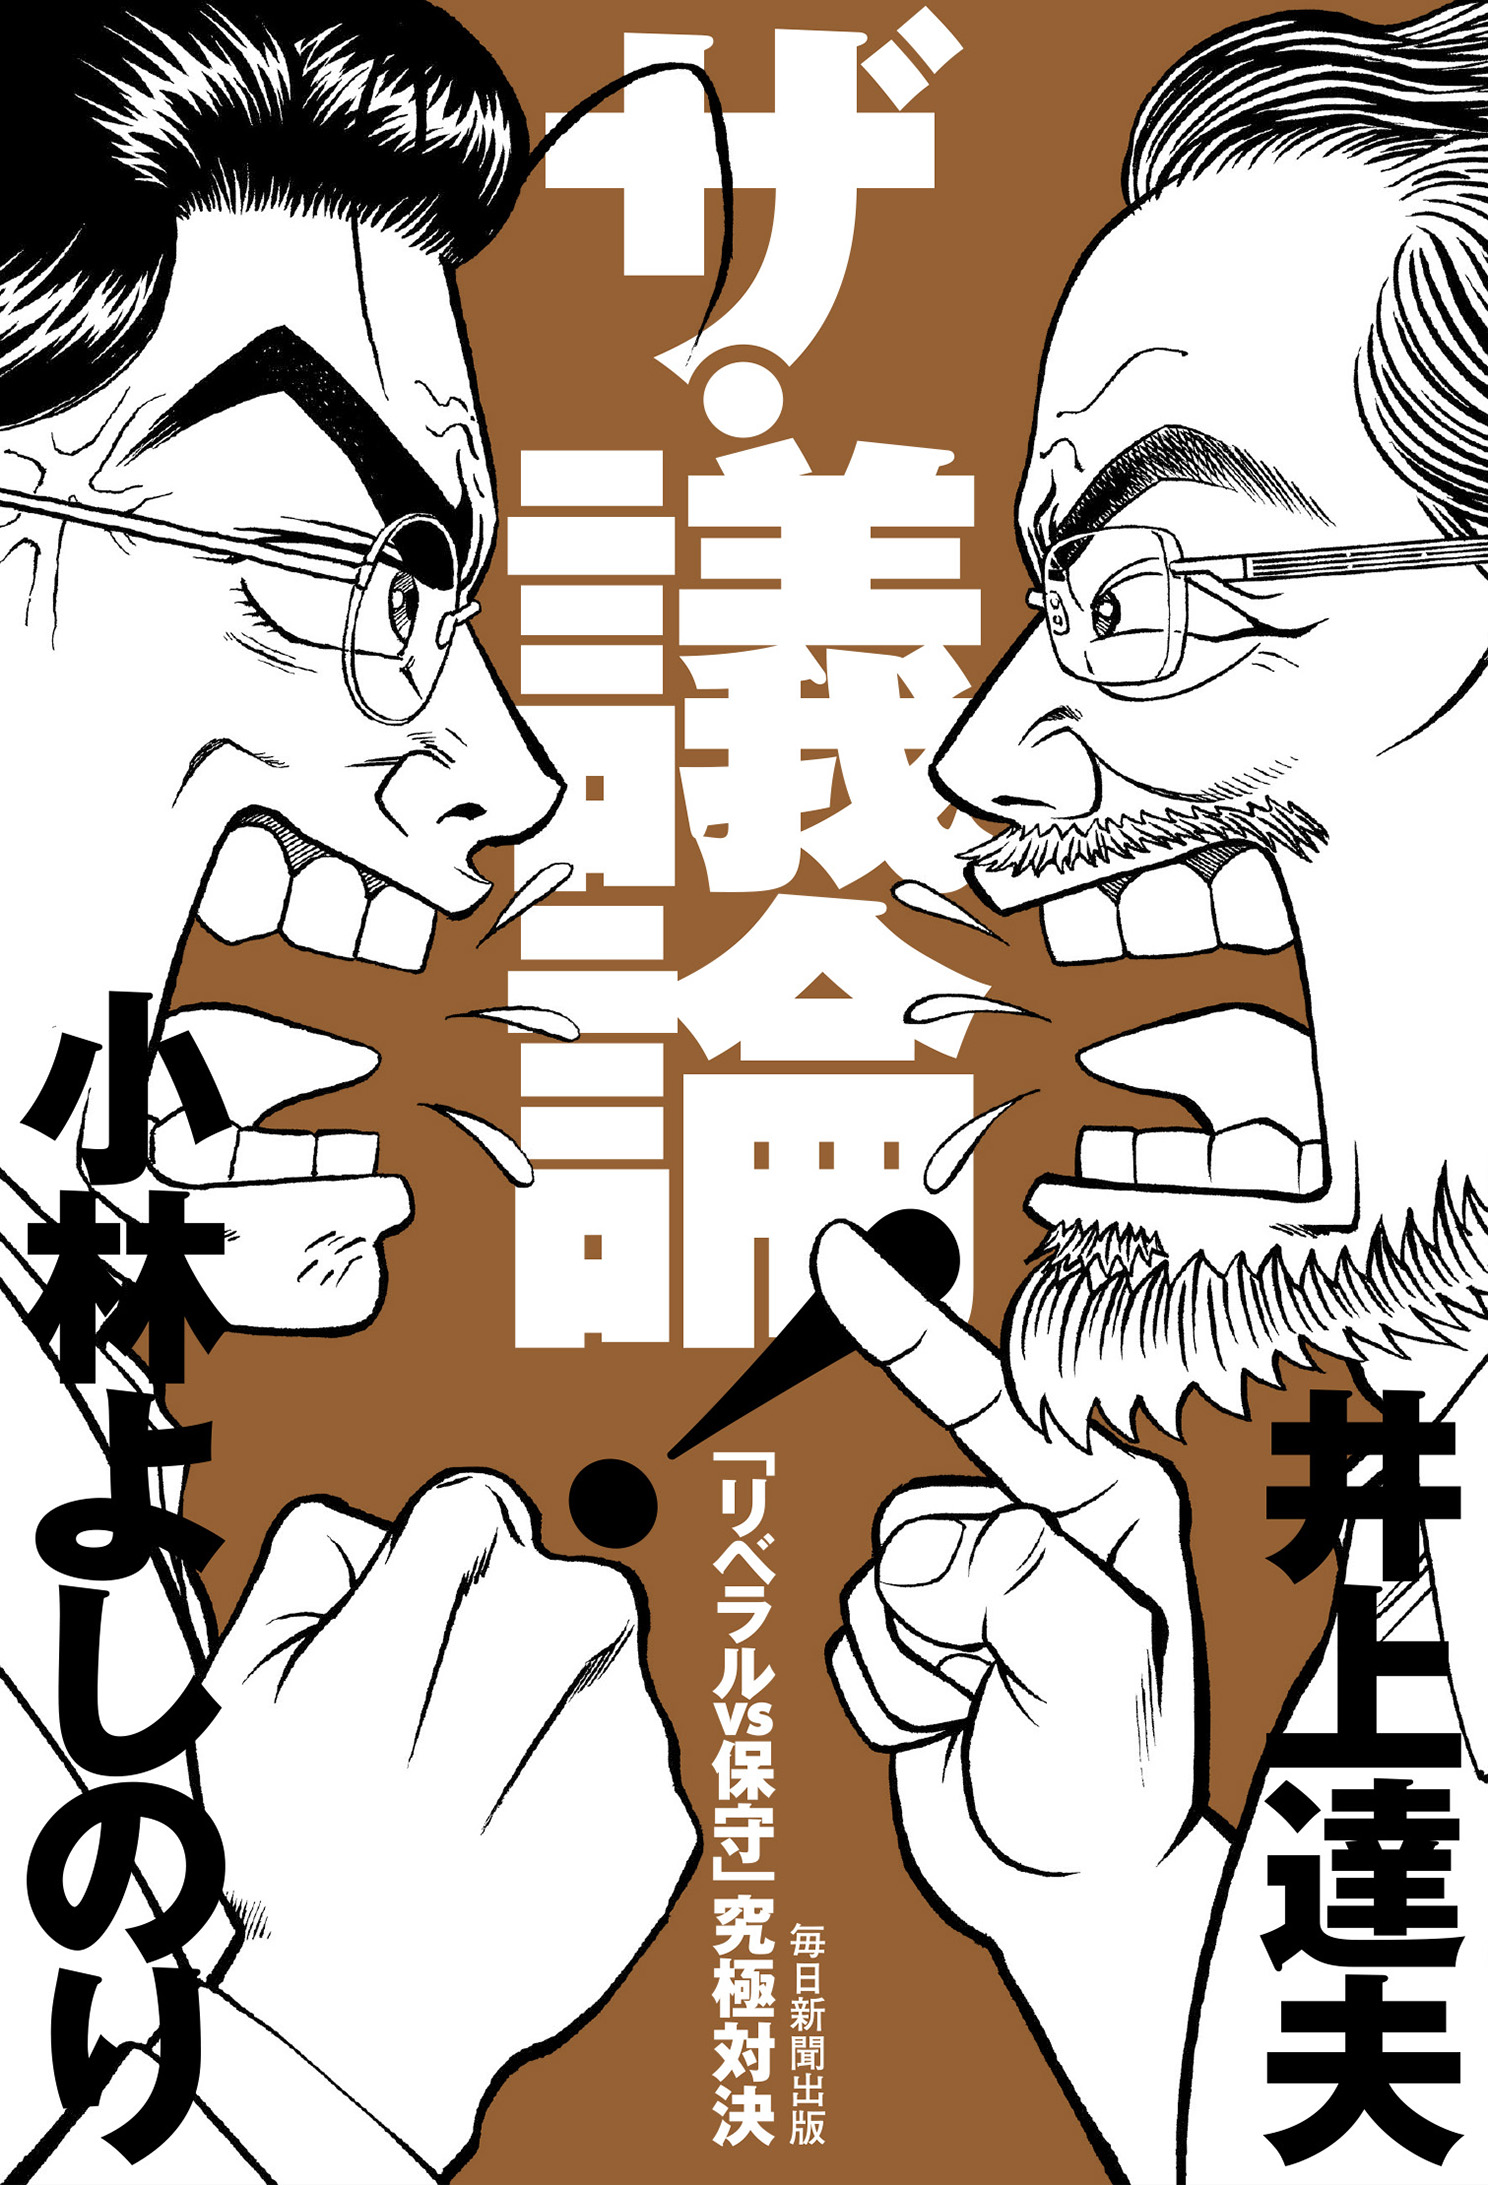 A cover with comic illustration of Inoue and Kobayashi debating